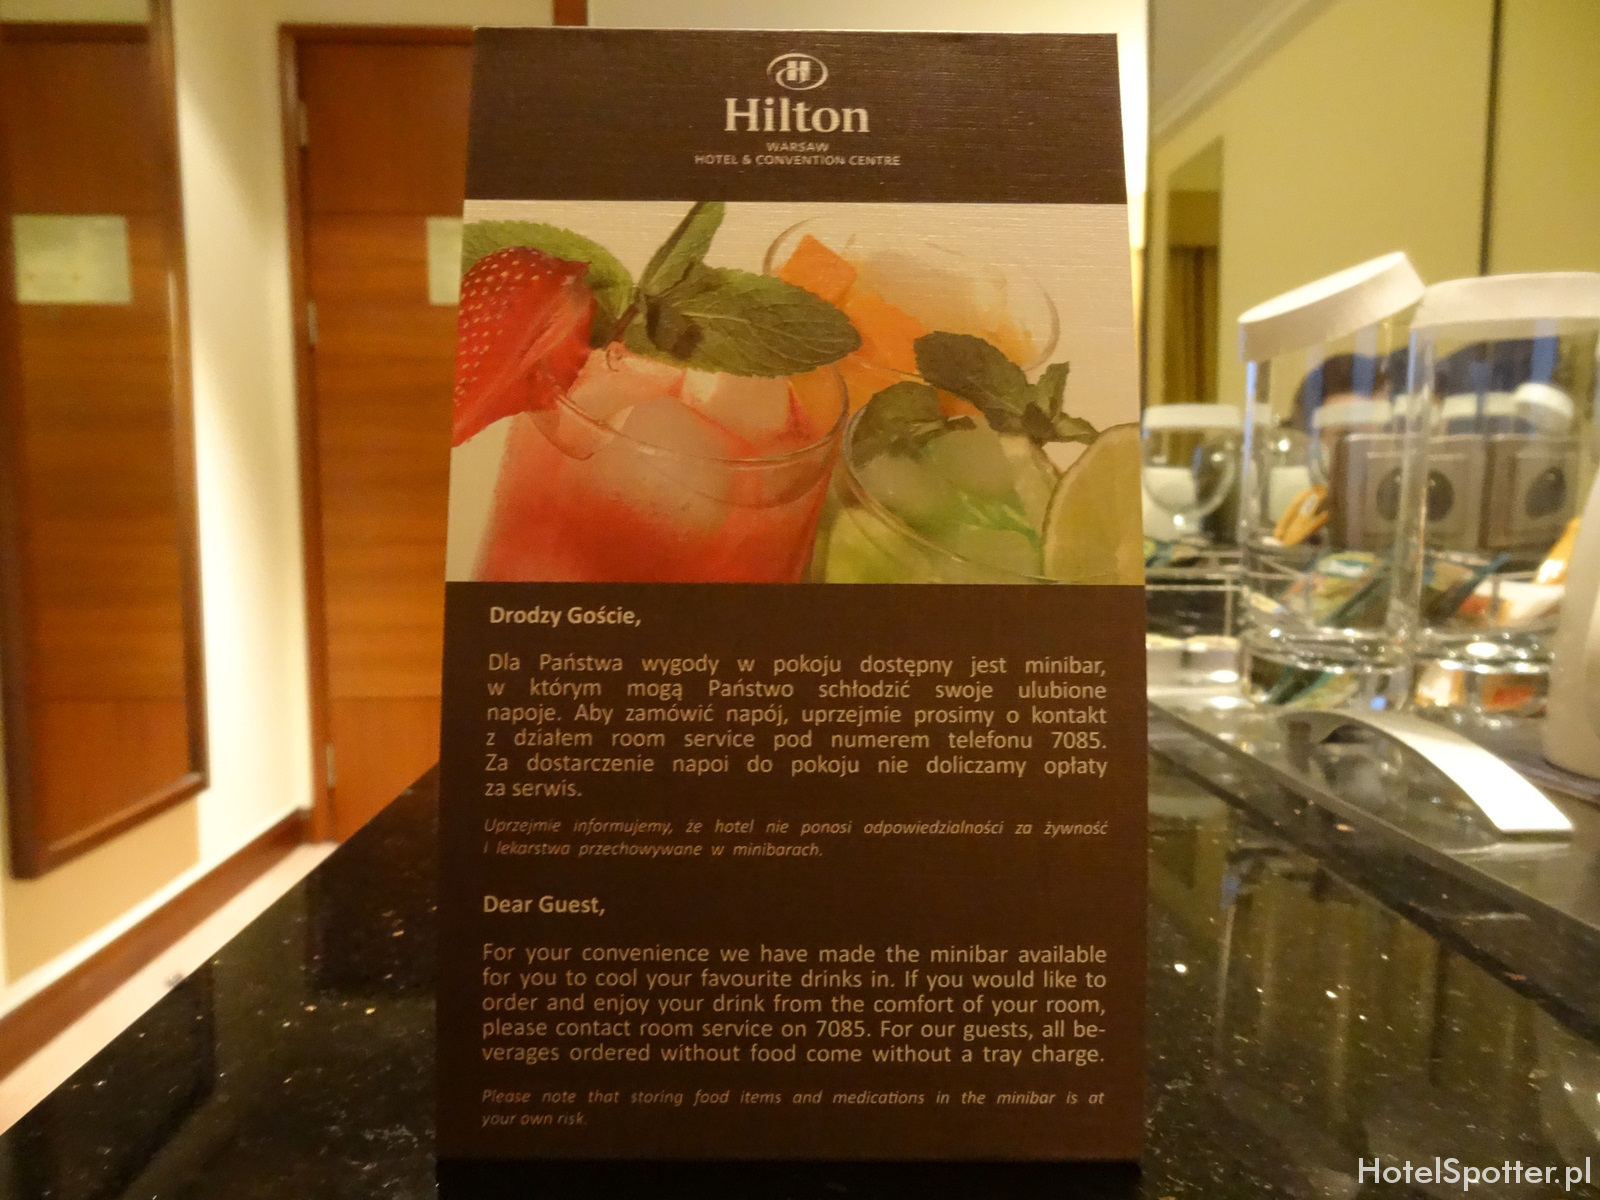 Hilton Warsaw Hotel - info o minibarze